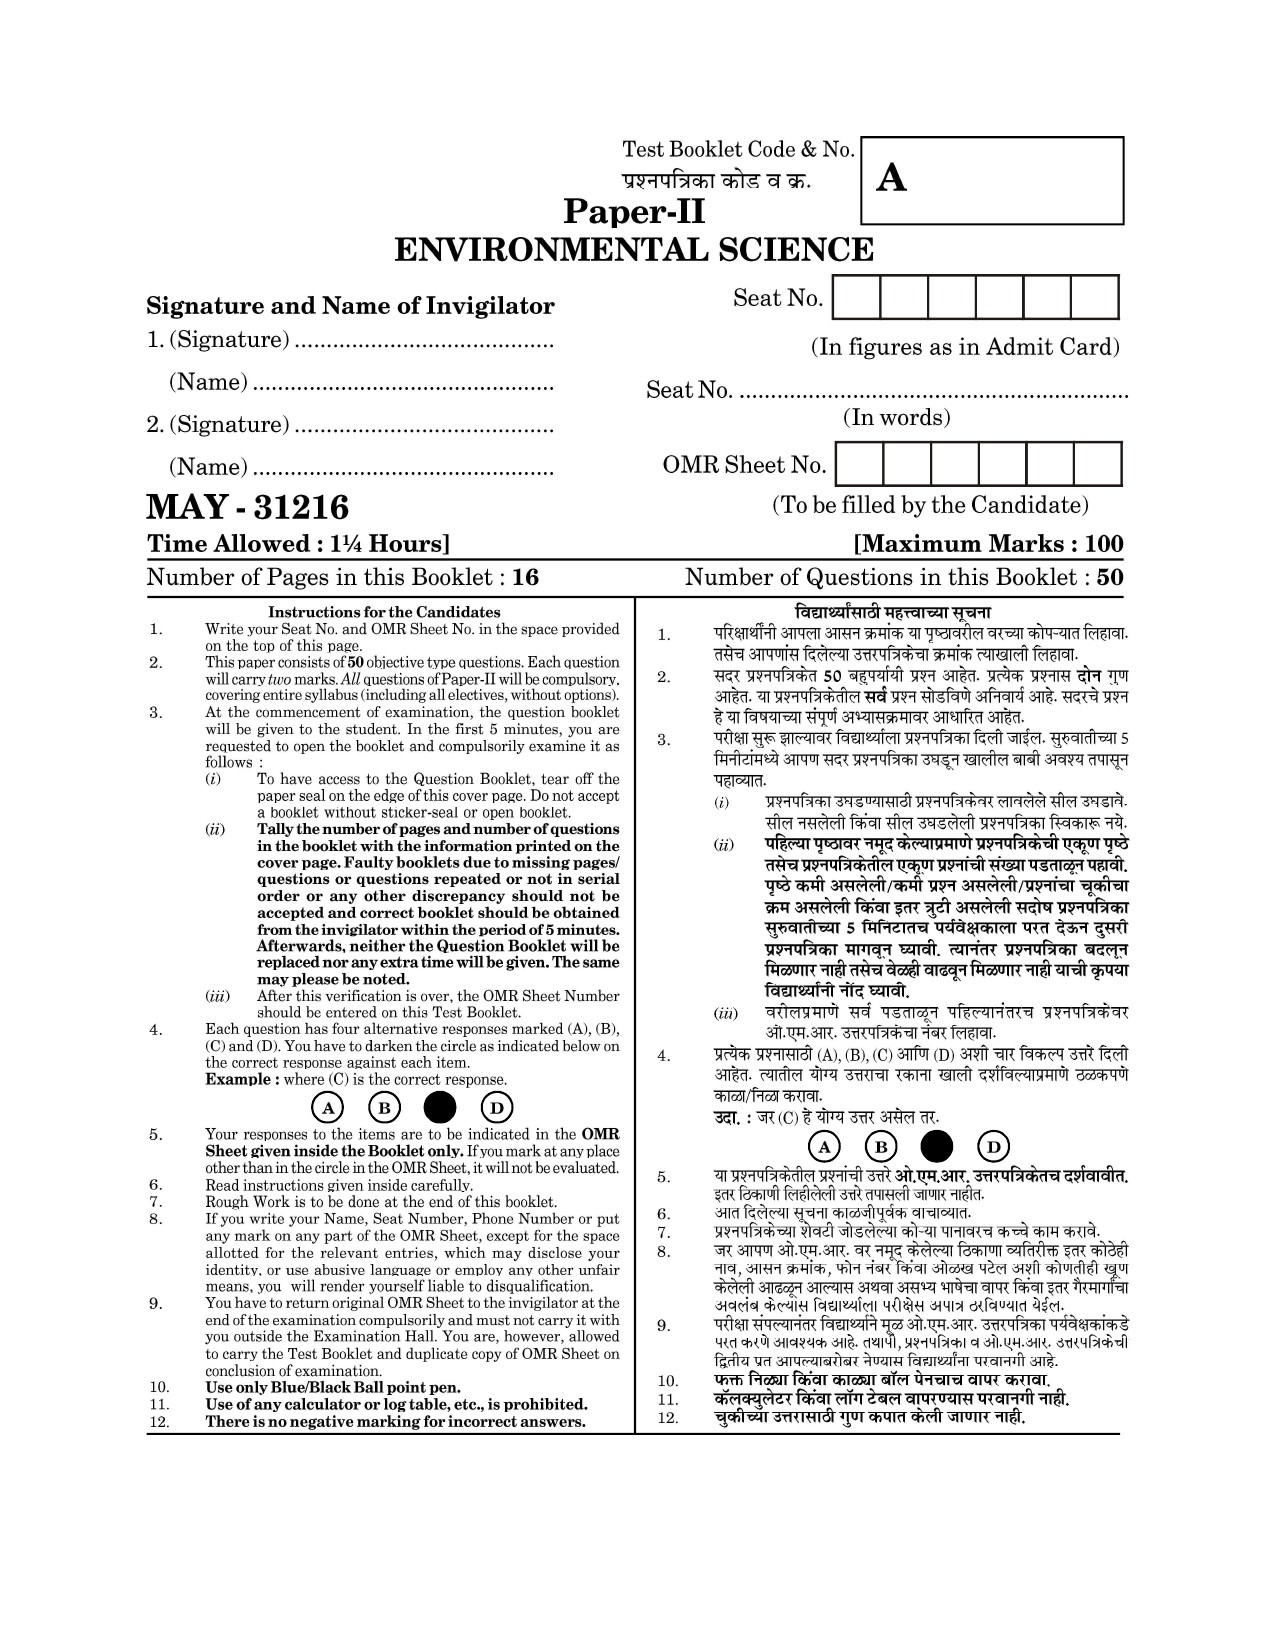 Maharashtra SET Environmental Sciences Question Paper II May 2016 1